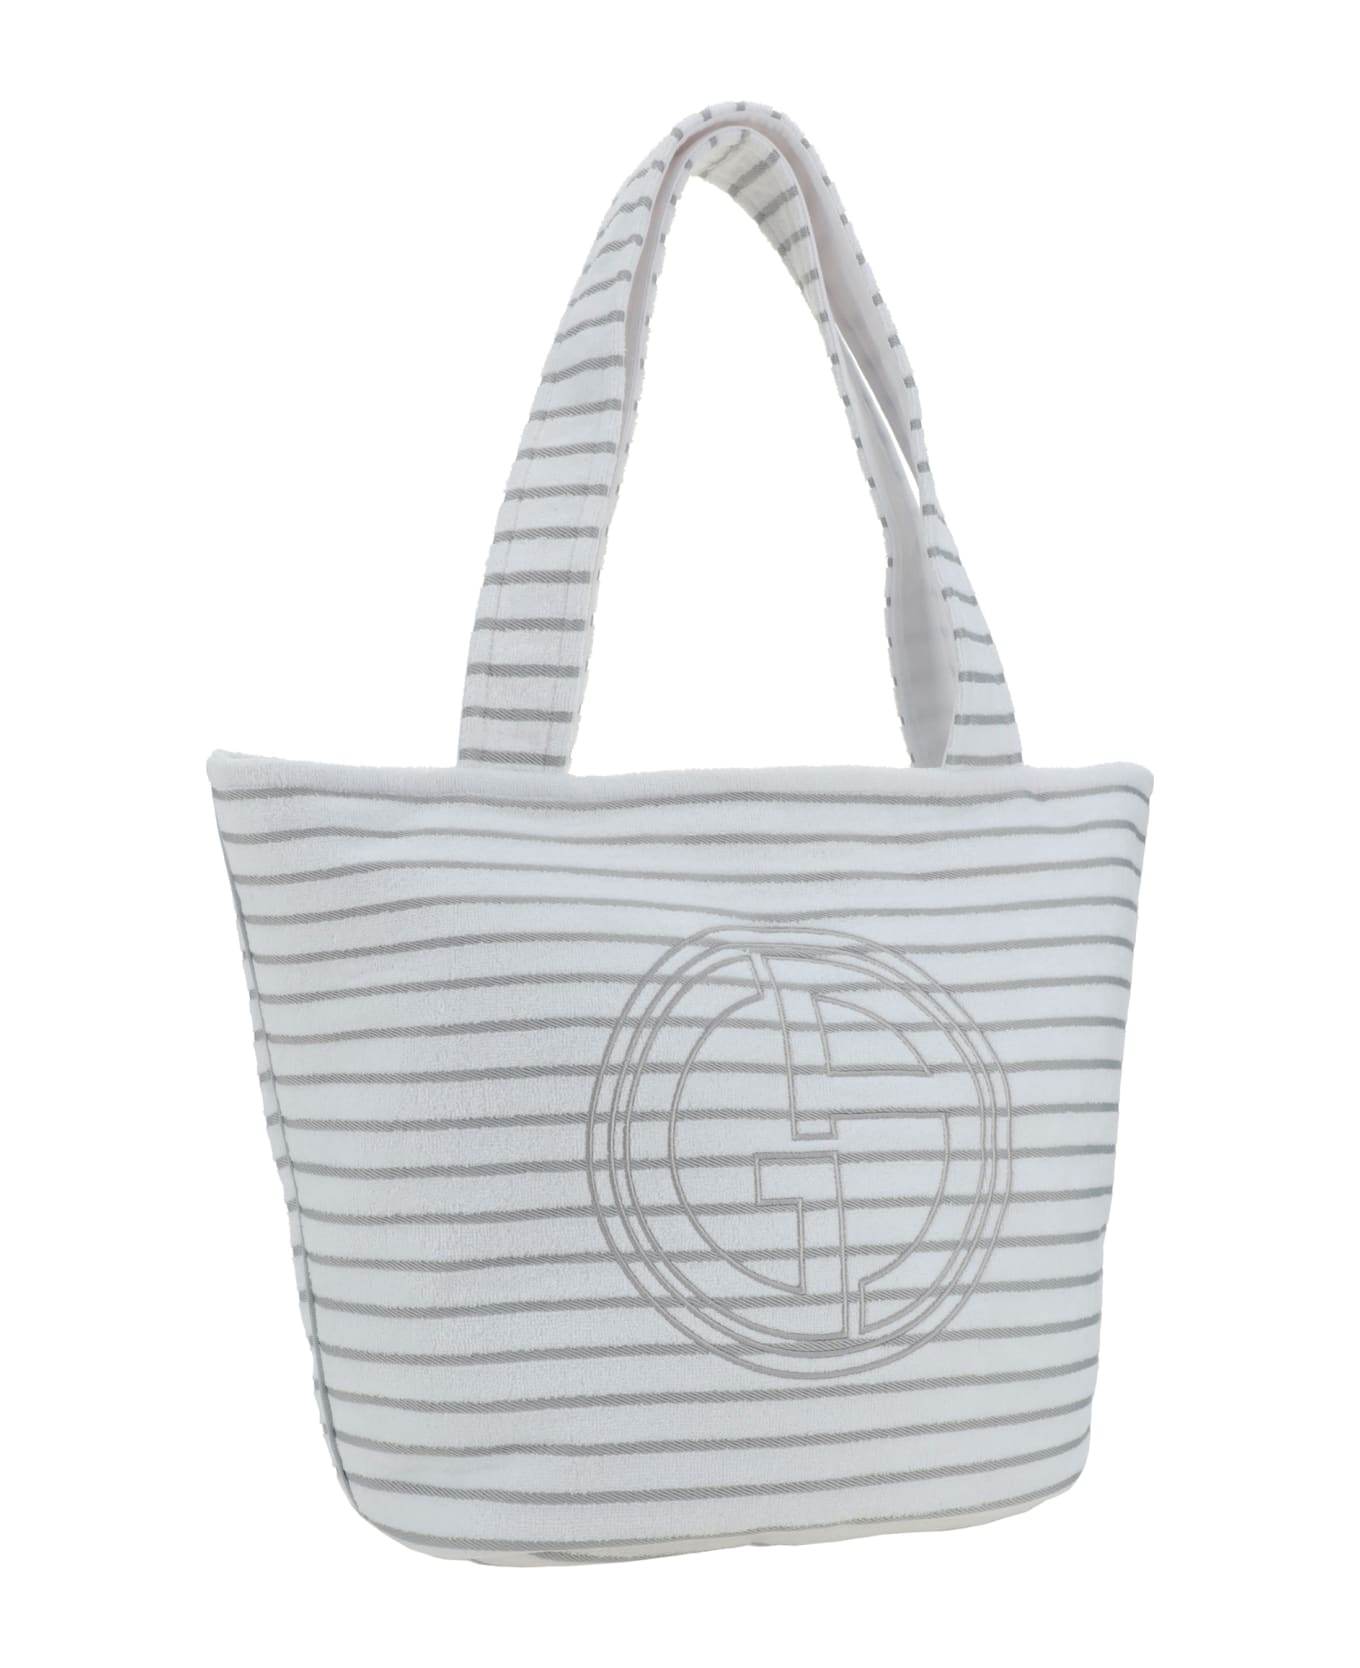 Giorgio Armani Shoulder Bag - Brilliant White トートバッグ